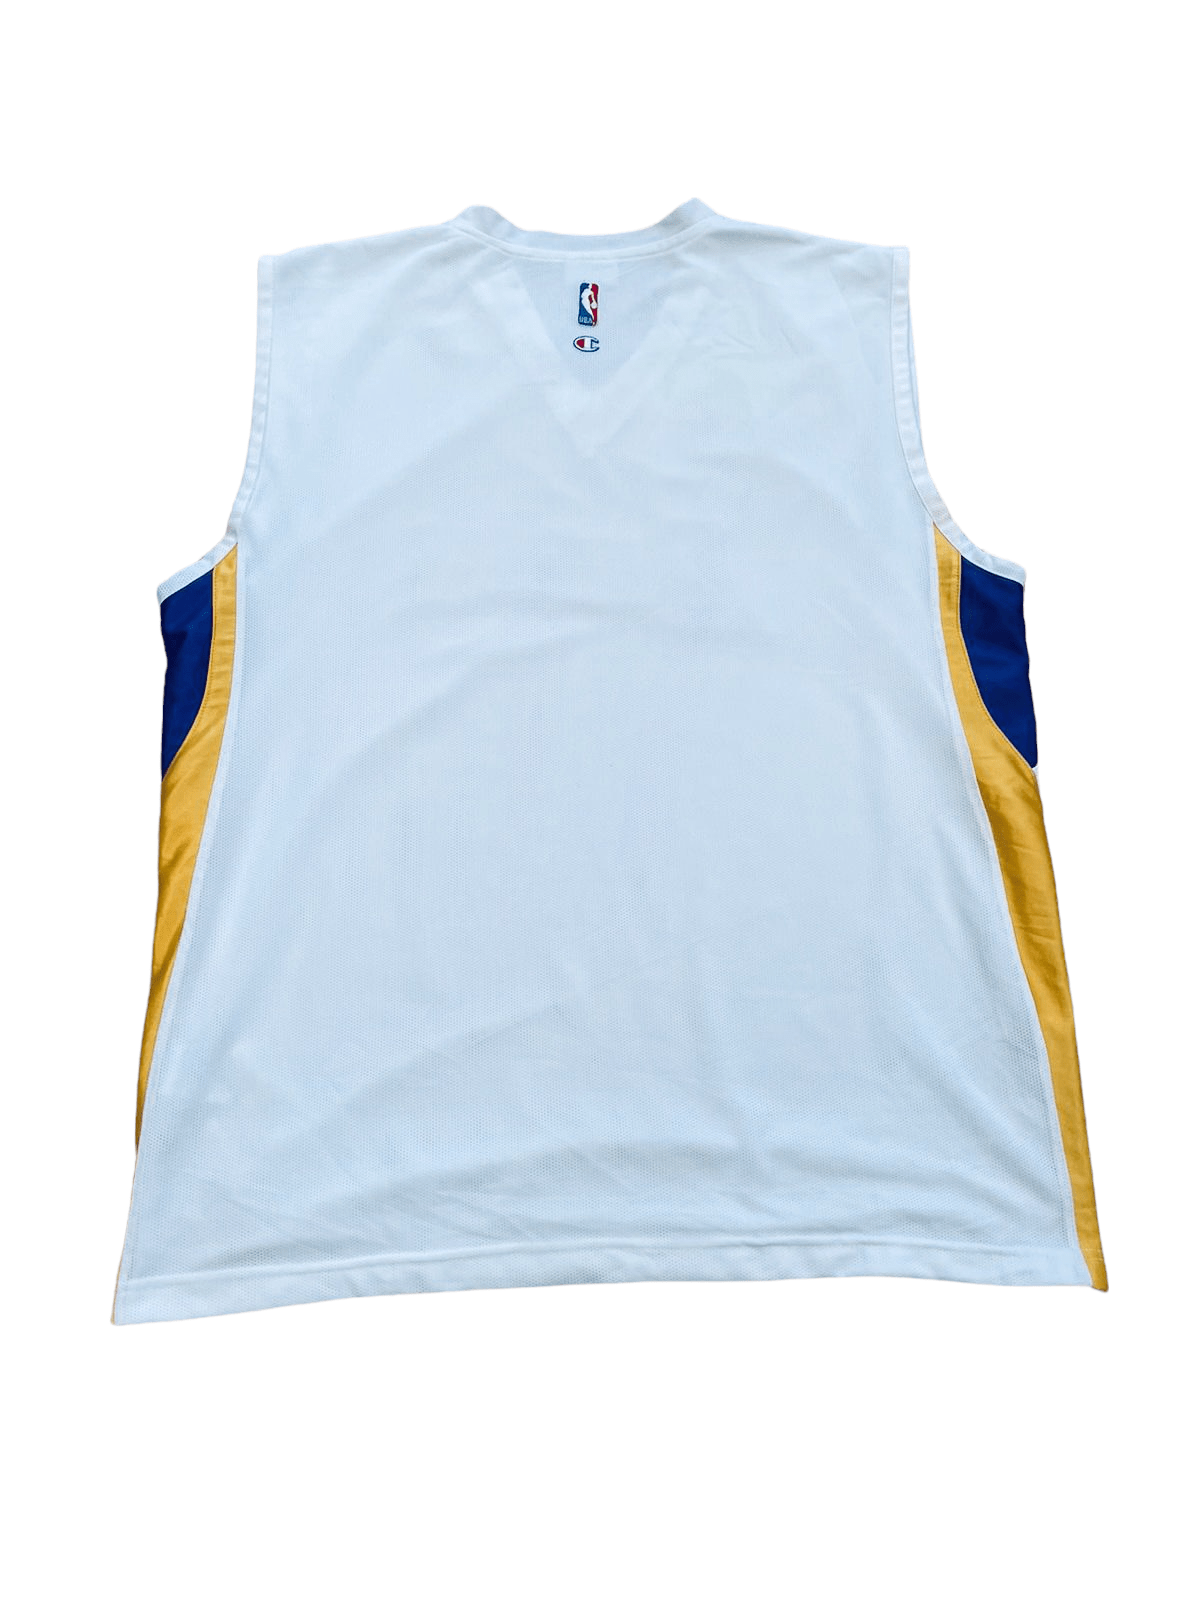 LA Lakers Warm-Up Basketball Jersey – ASAP Vintage Clothing